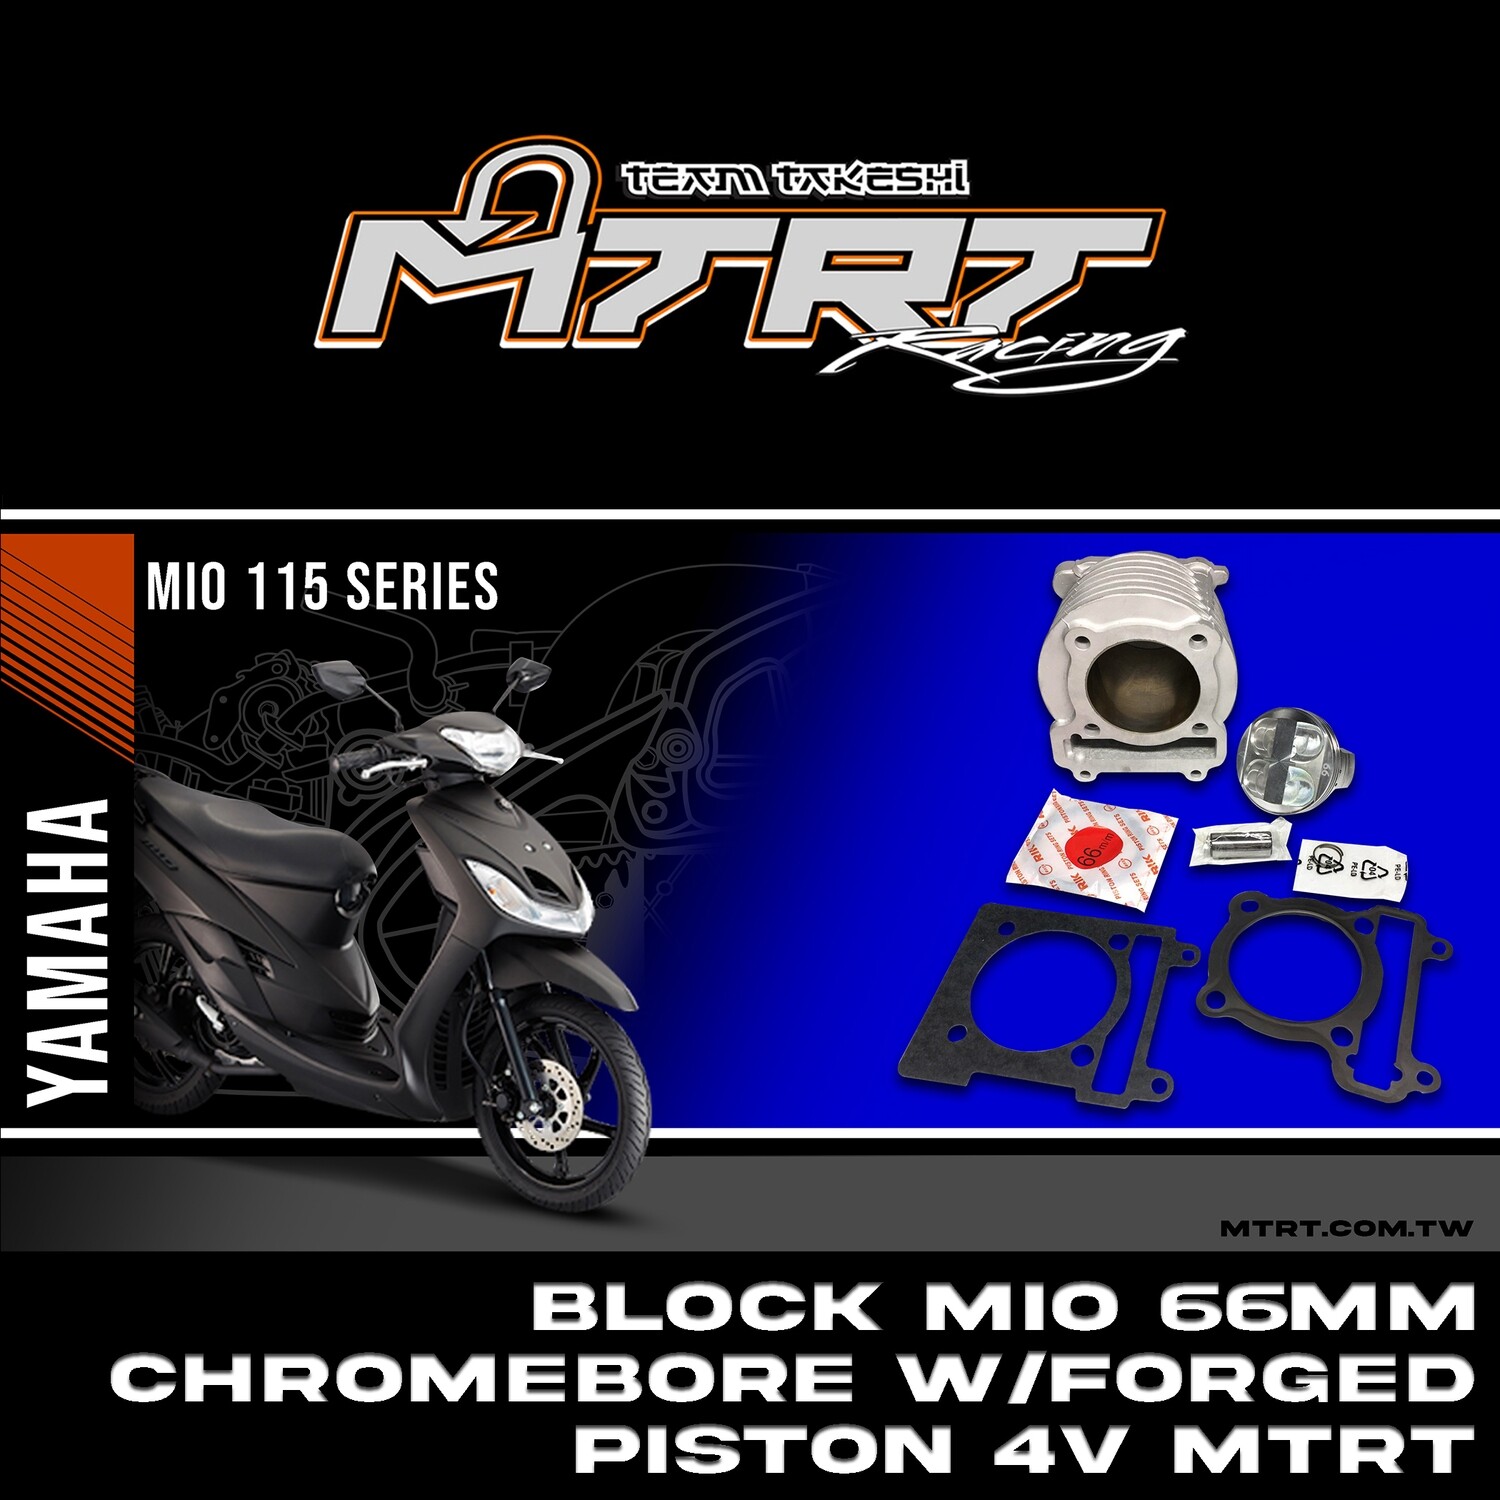 BLOCK MIO 66MM Chromebore w/ forged piston 4V MTRT